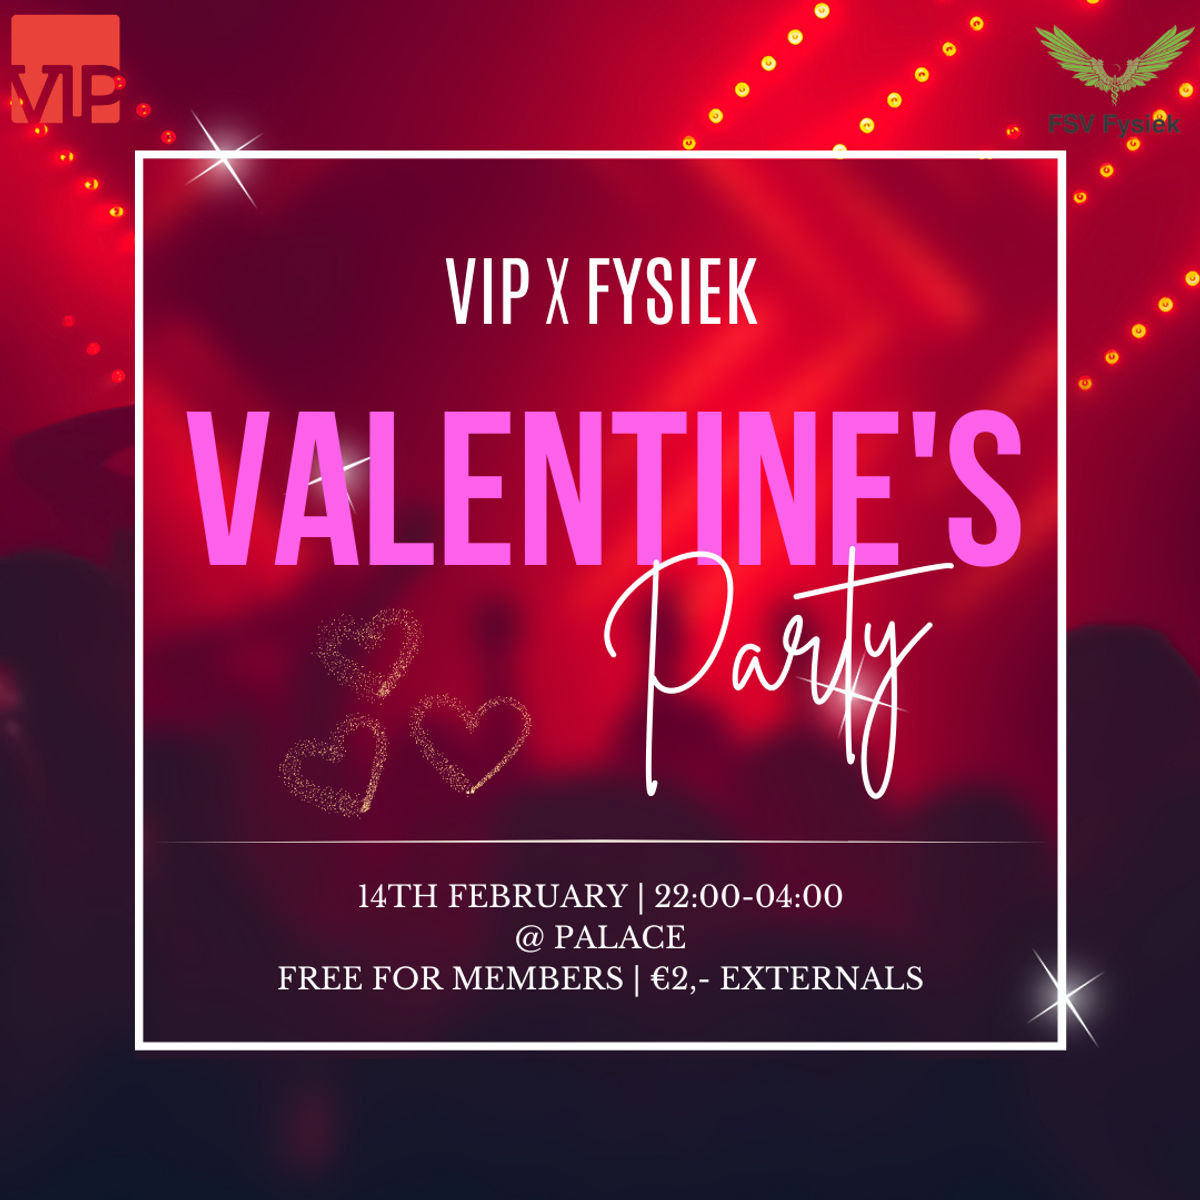 VIP x Fysiek: Valentine's Party